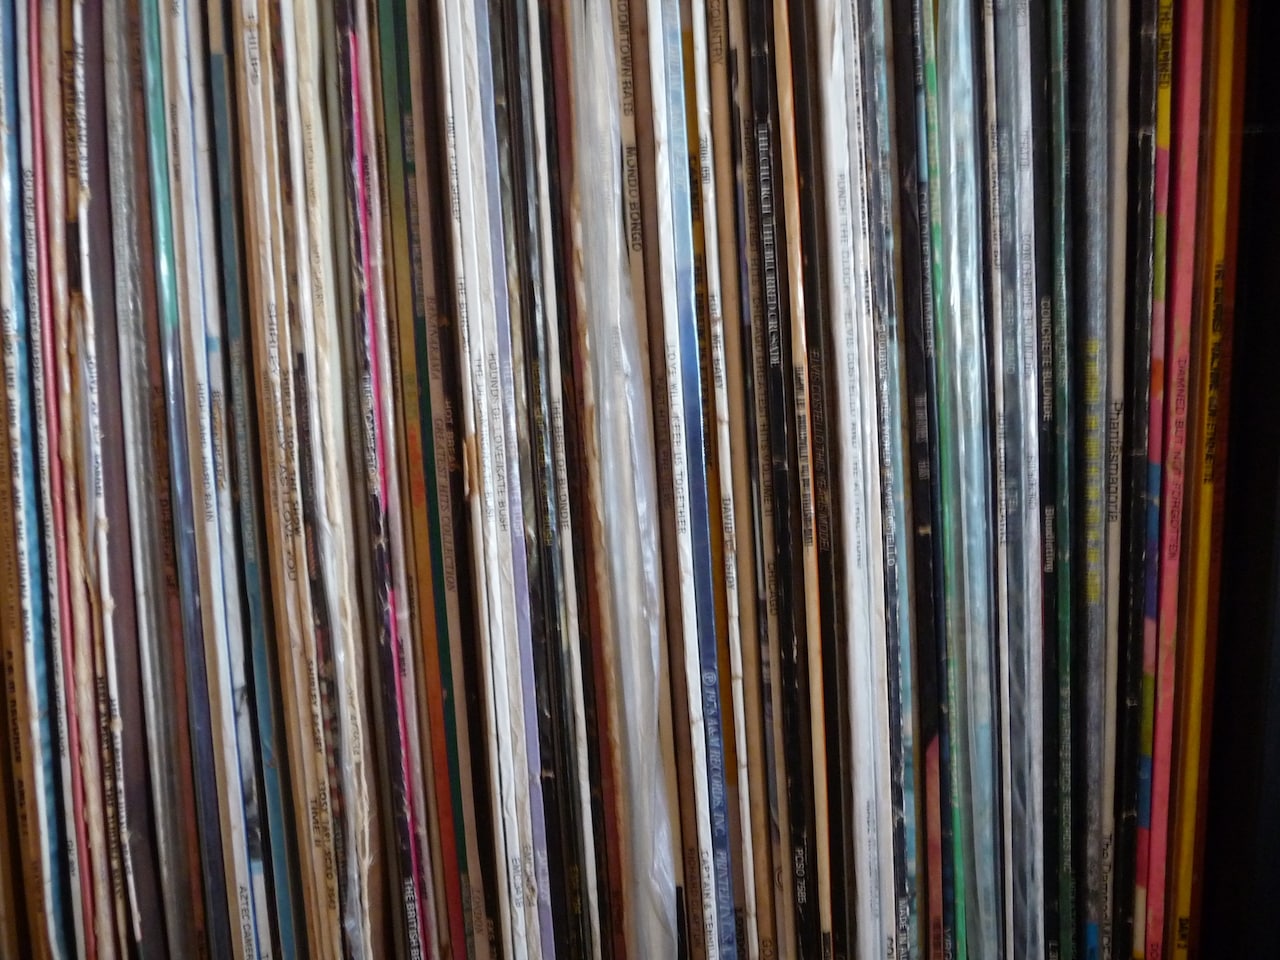 vinyl records LPs on shelf